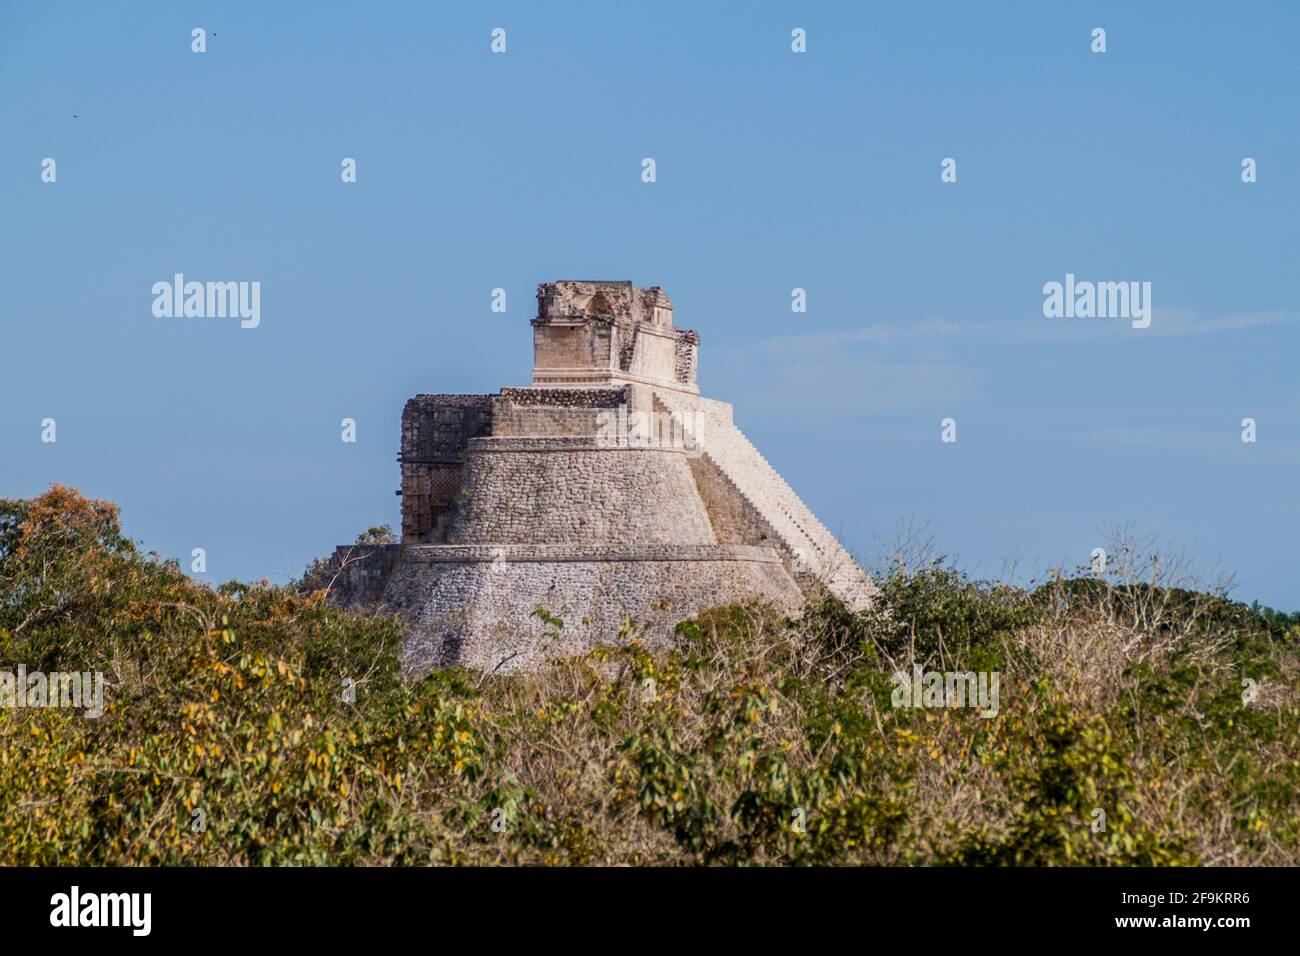 Pyramid of the Magician Piramide del adivino in ancient Mayan city Uxmal, Mexico Stock Photo